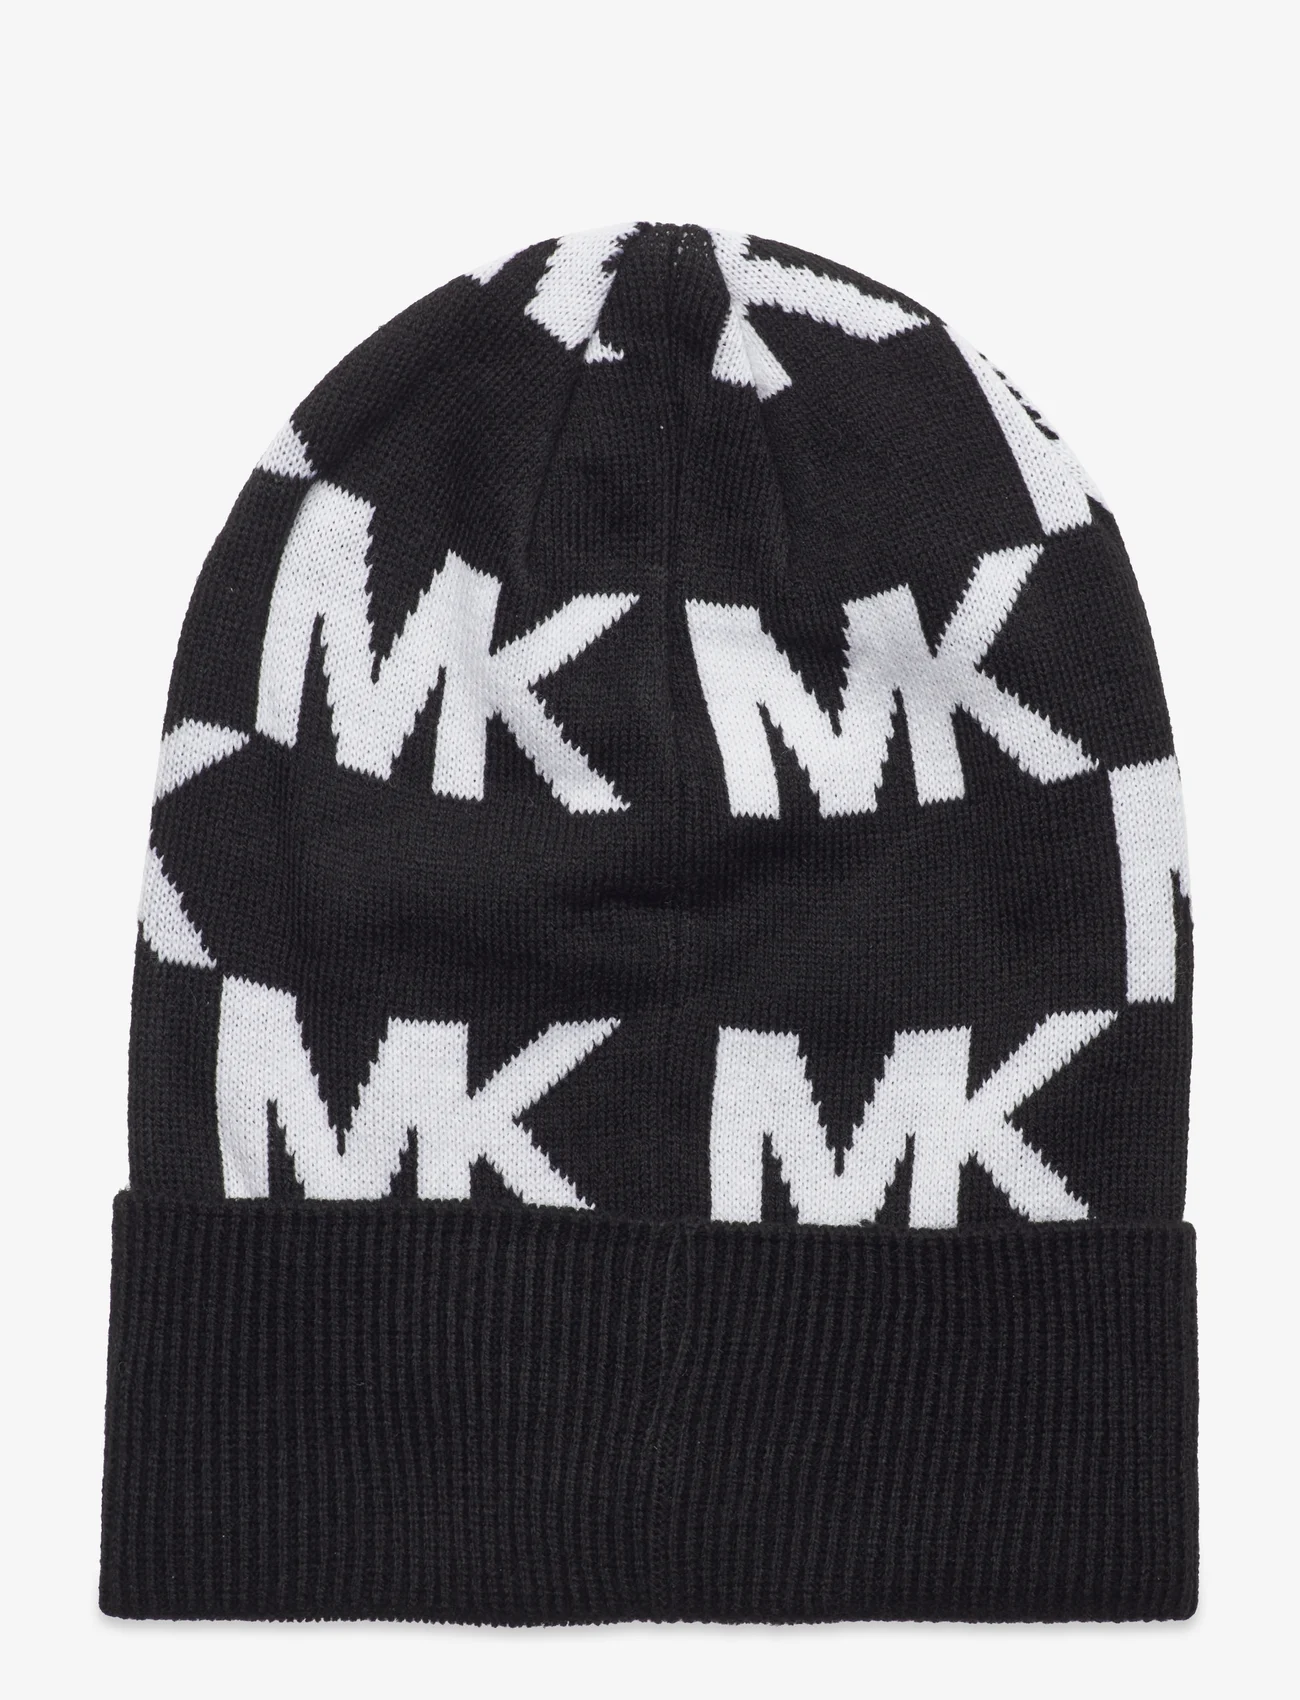 Michael Kors Accessories - Oversized chess mk cuff hat - mützen - black, cream - 1